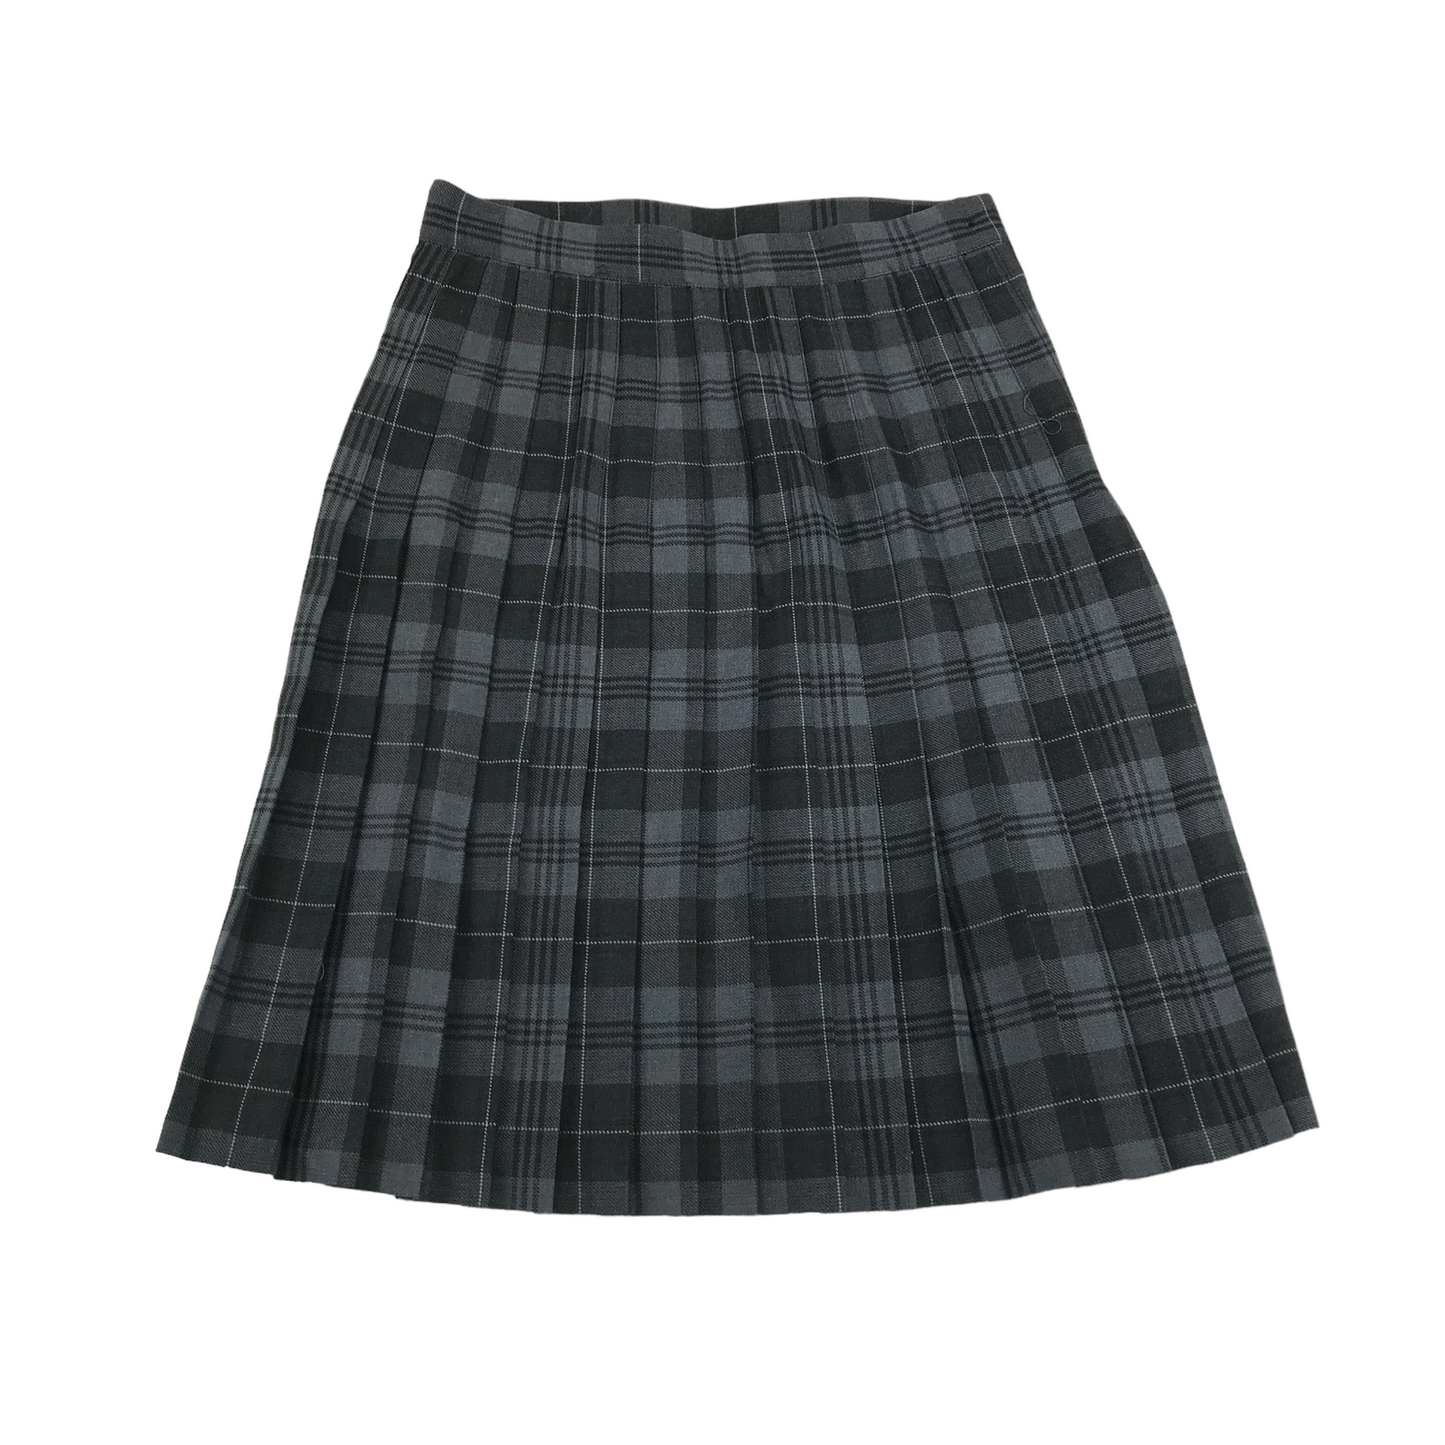 Dunairn Grey Tartan Skirt Size W24 L20